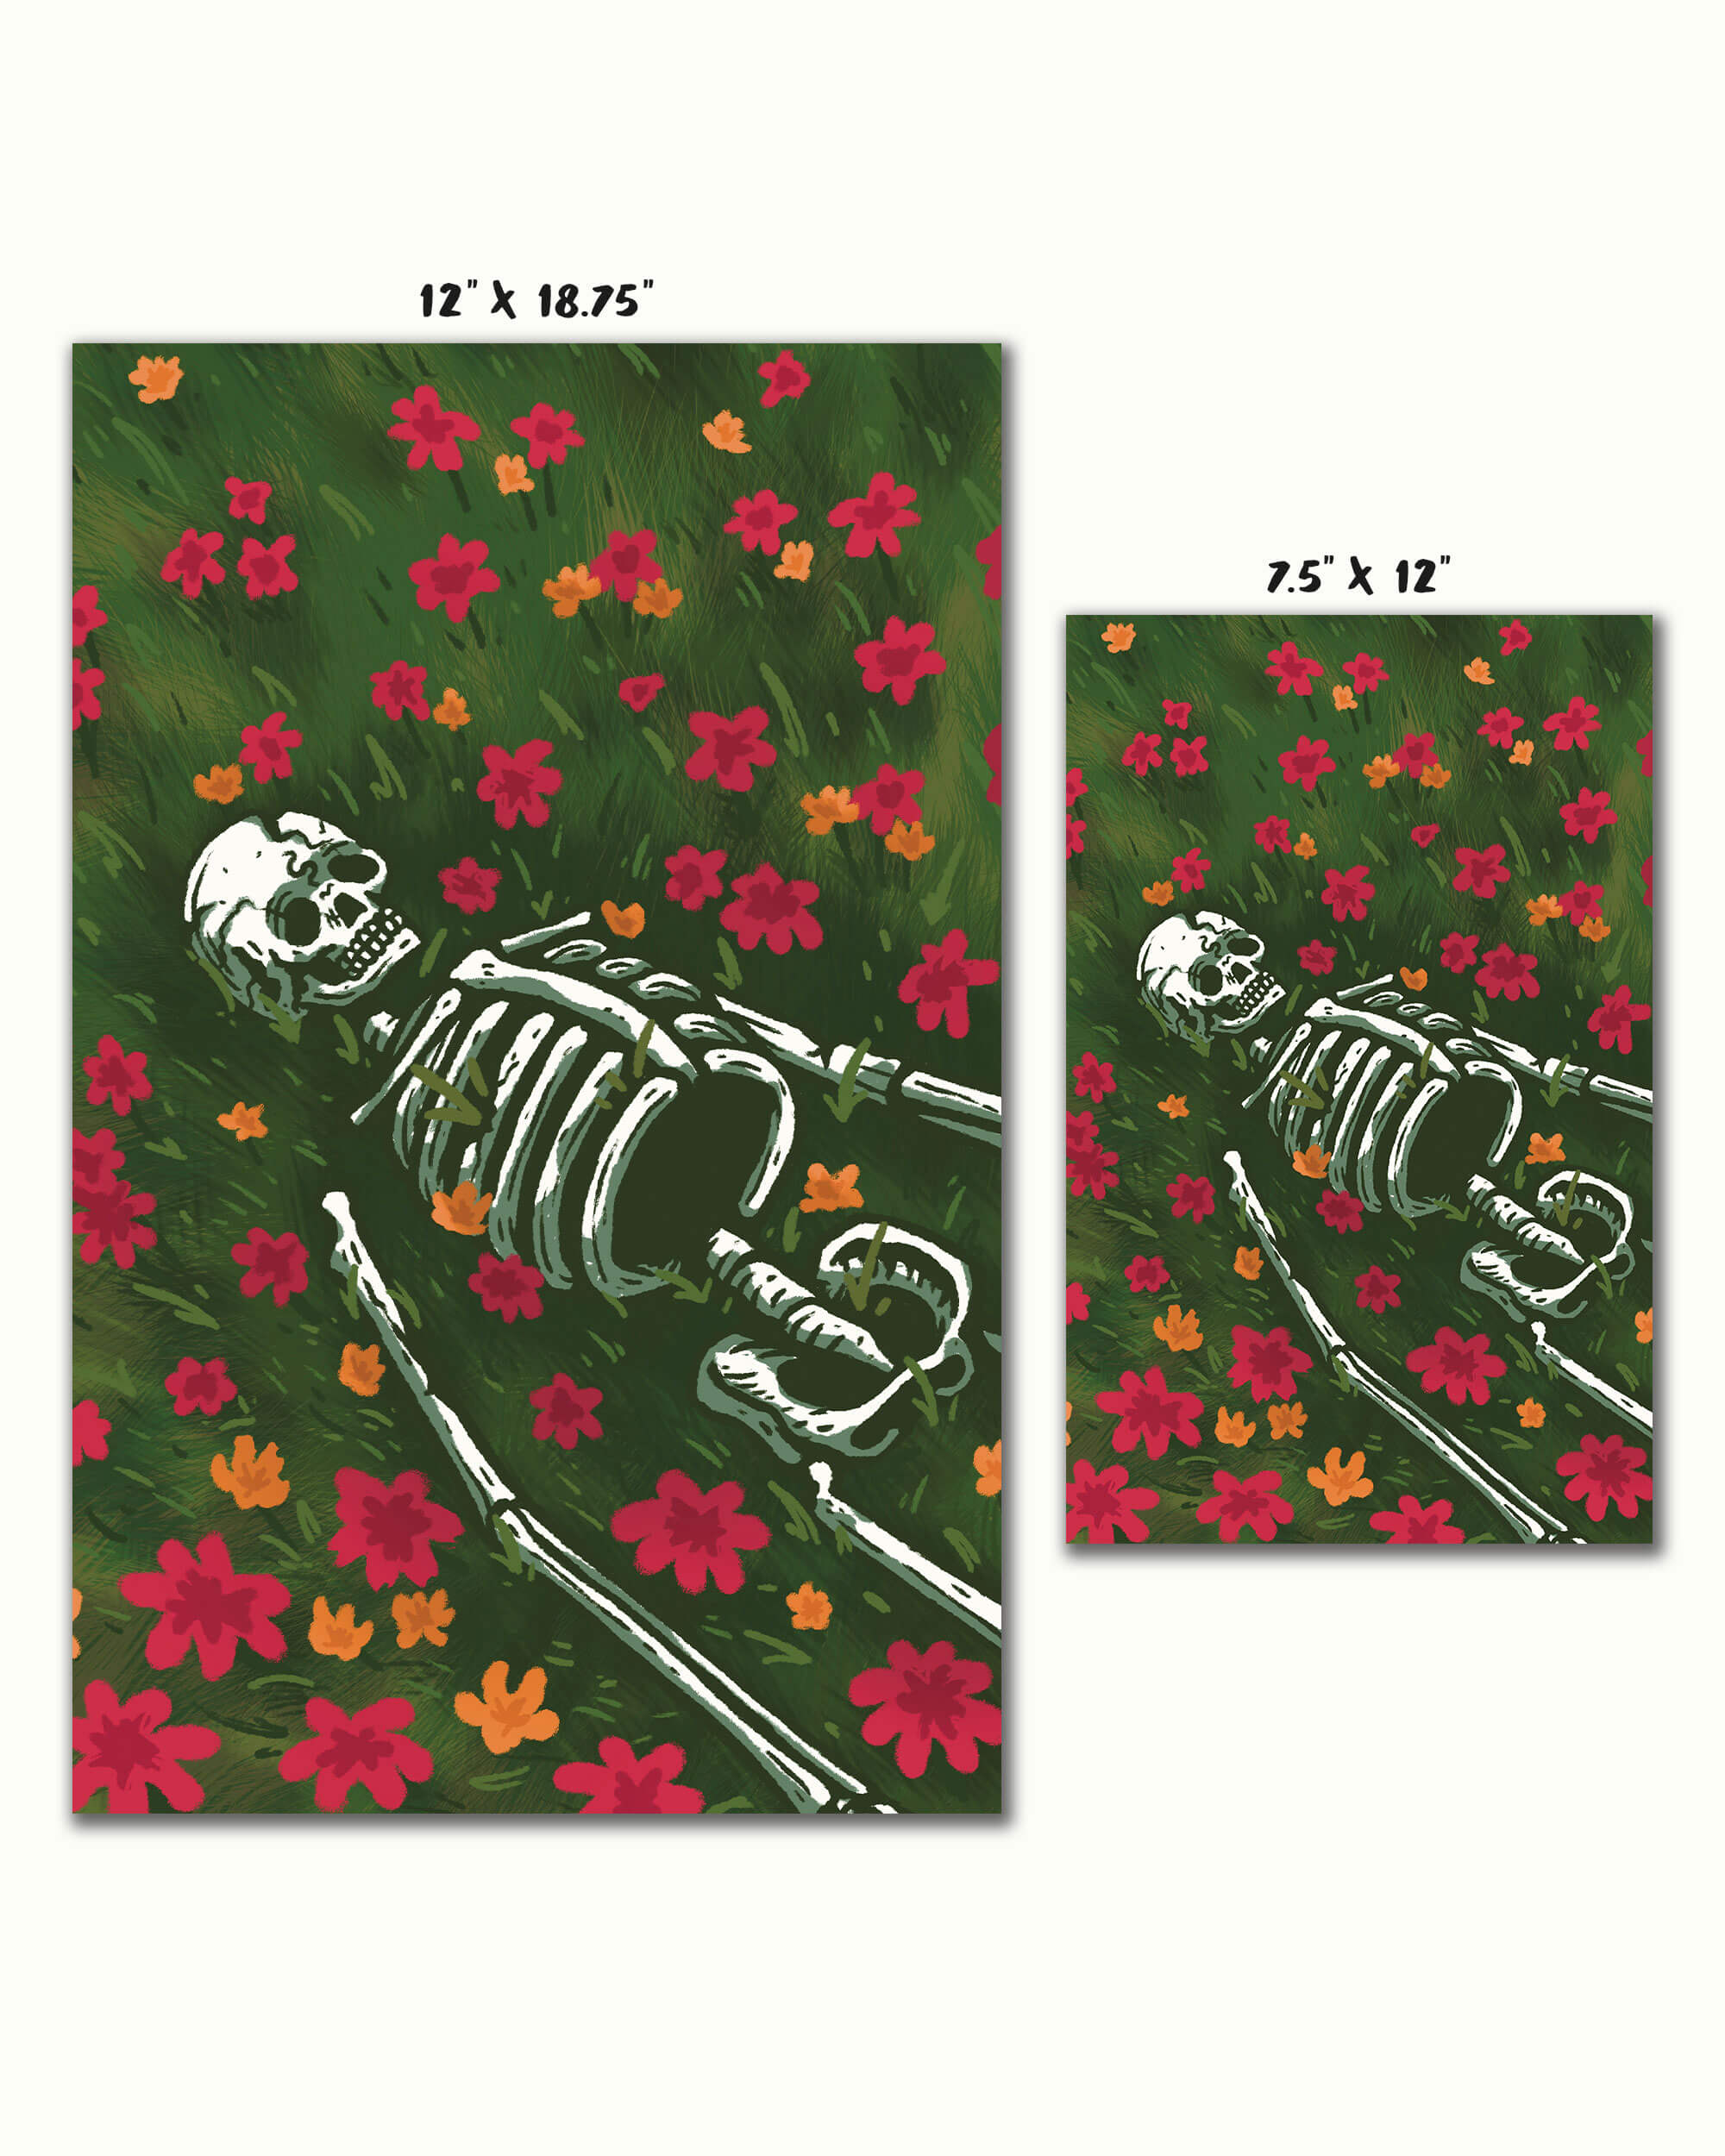 Flowers Print